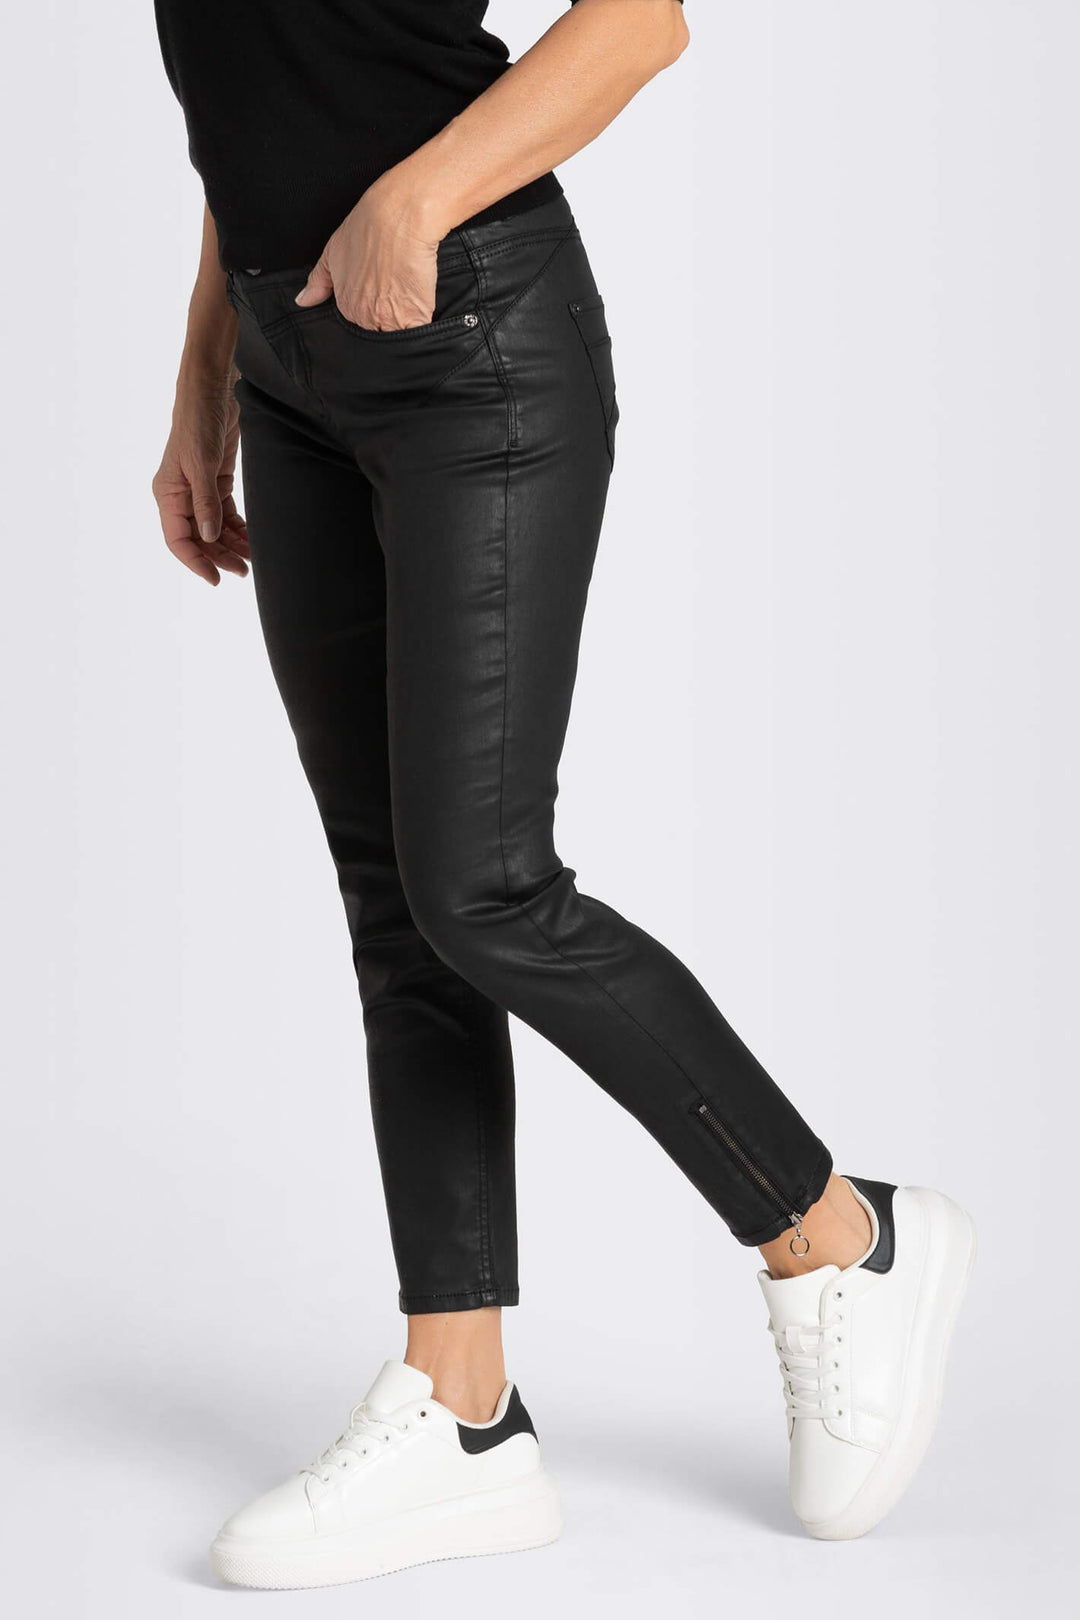 Mac 5768-01-0465L 090 Black Rich Slim Chic Coating Jeans - Olivia Grace Fashion